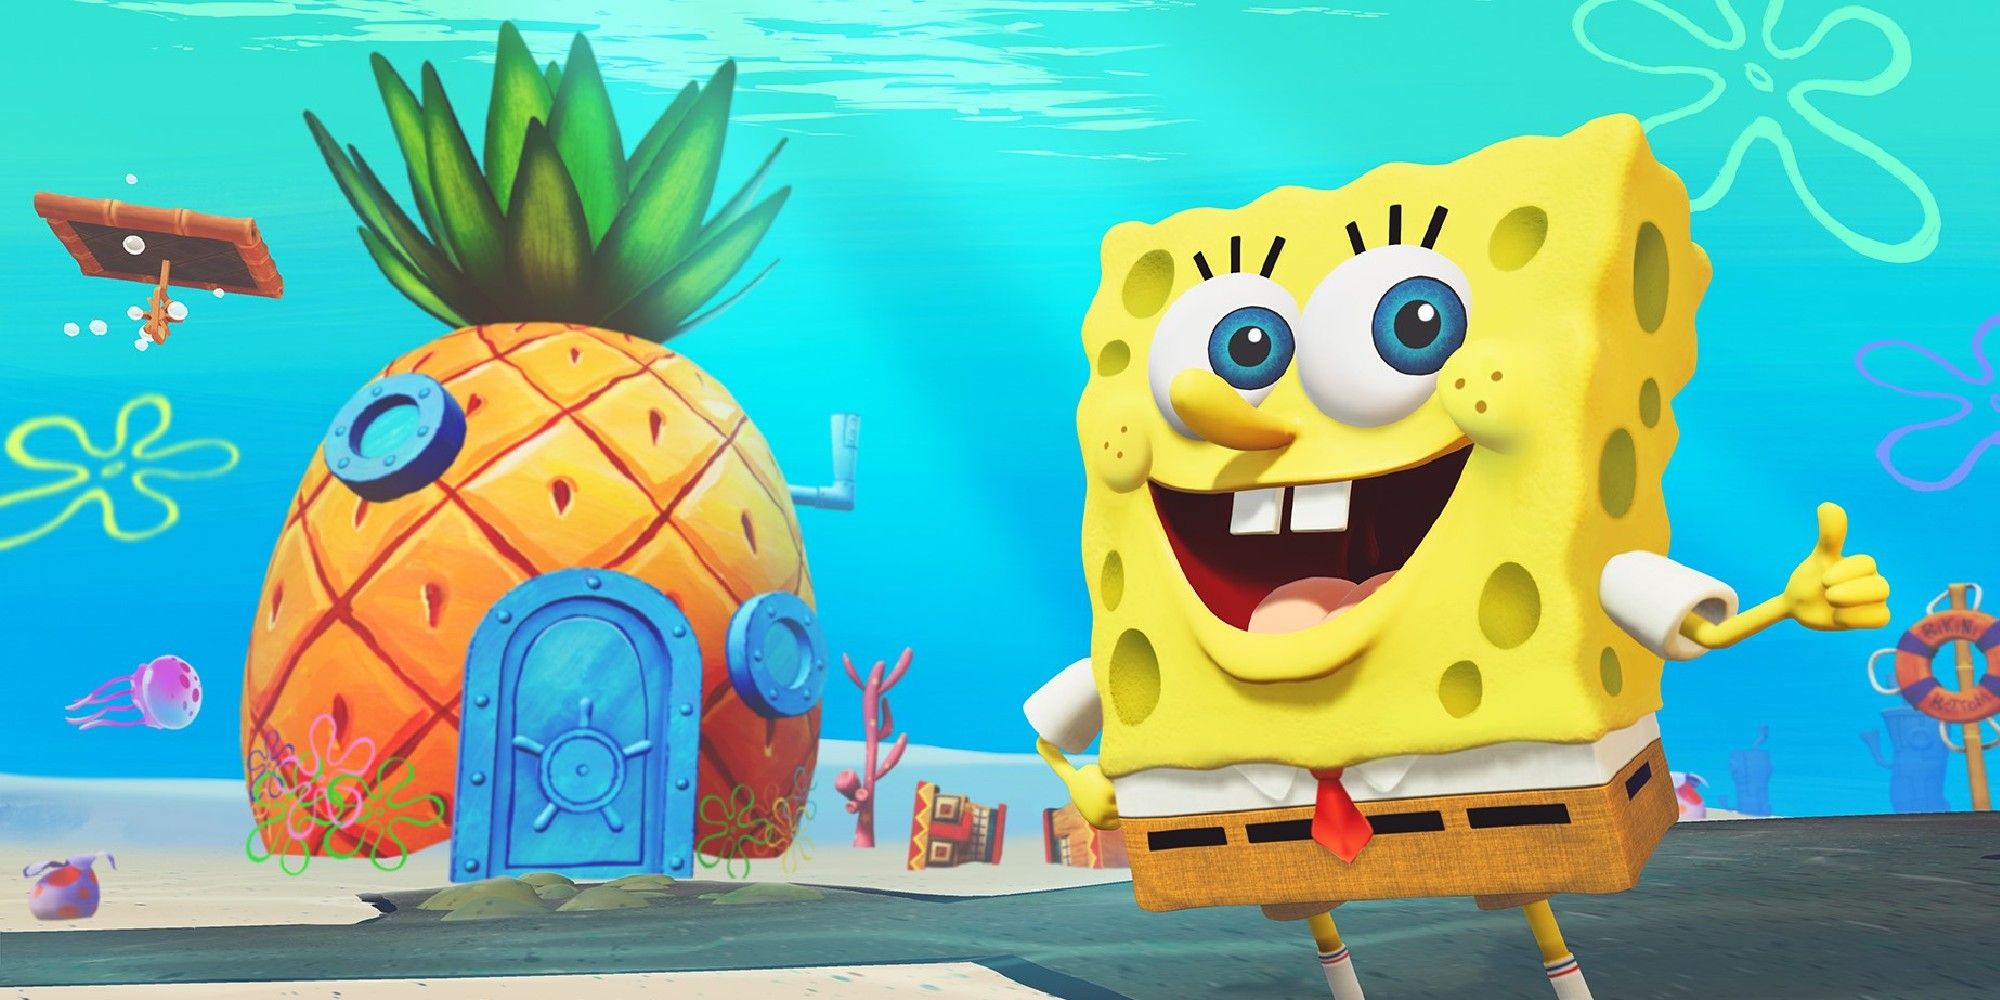 Spongebob-Battle-for-Bikini-Bottom-Rehydrated spongebob in front of his house